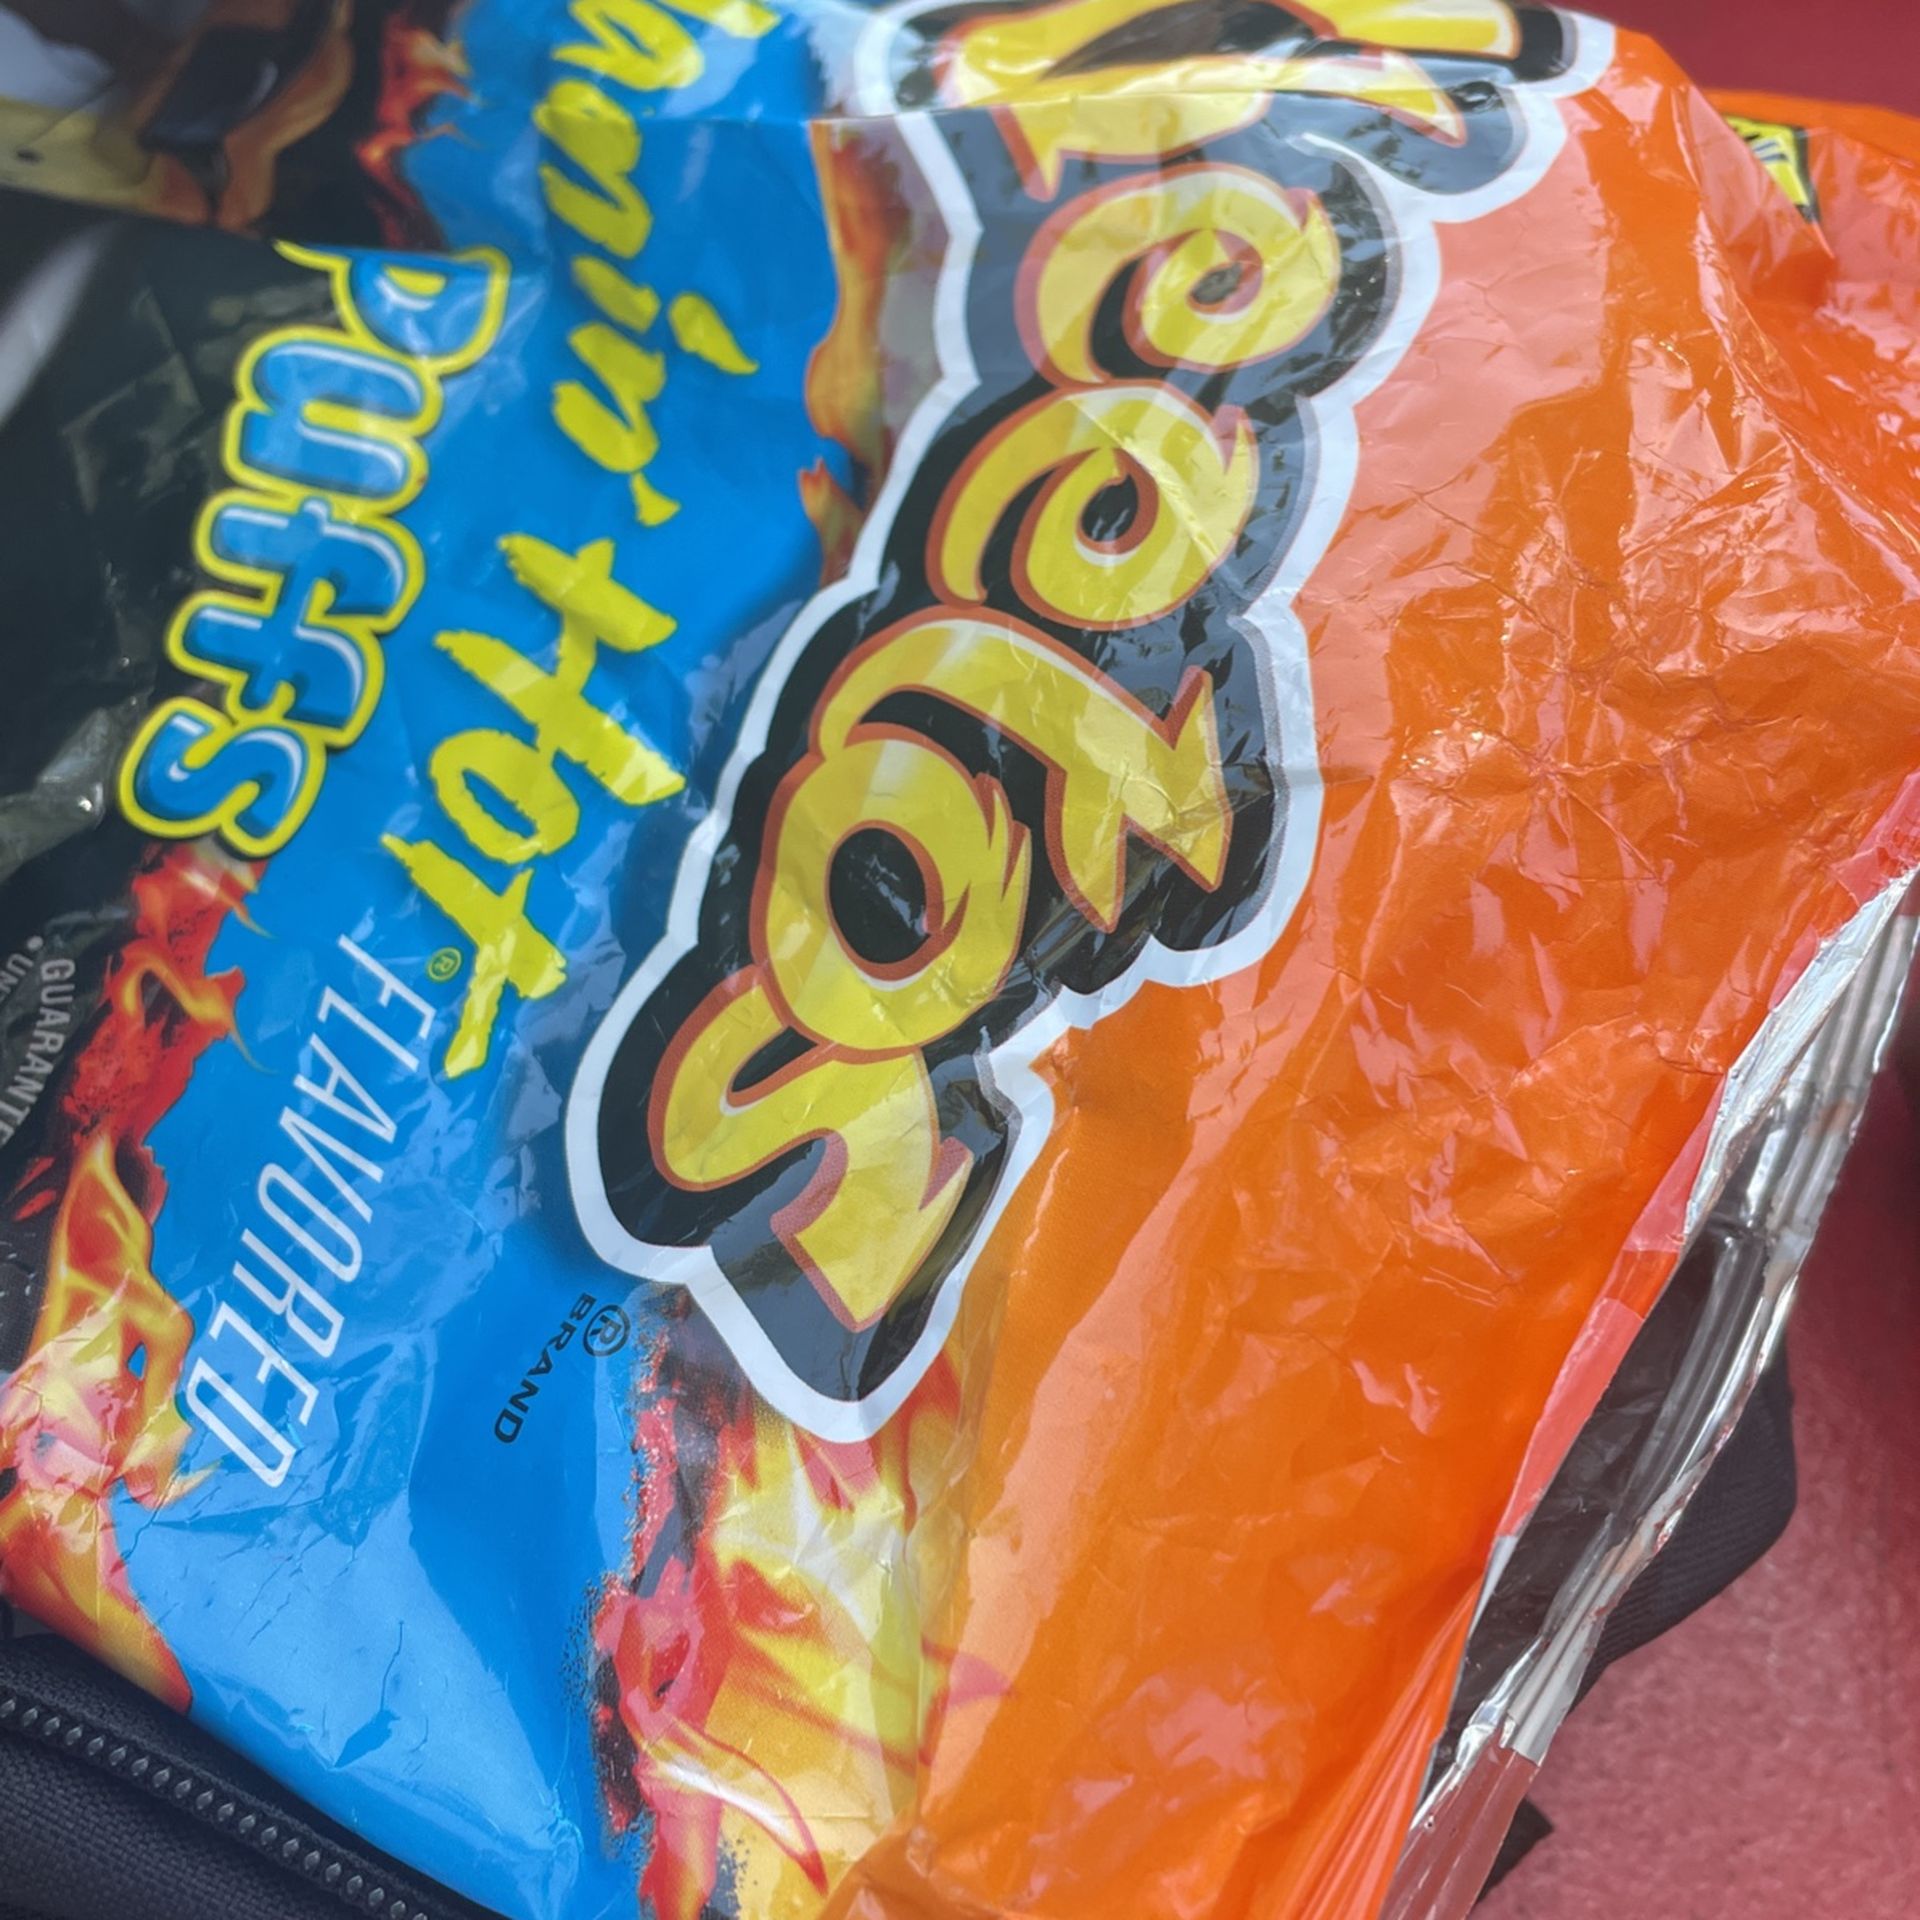 Hot Cheetos Bag Limited Edition 